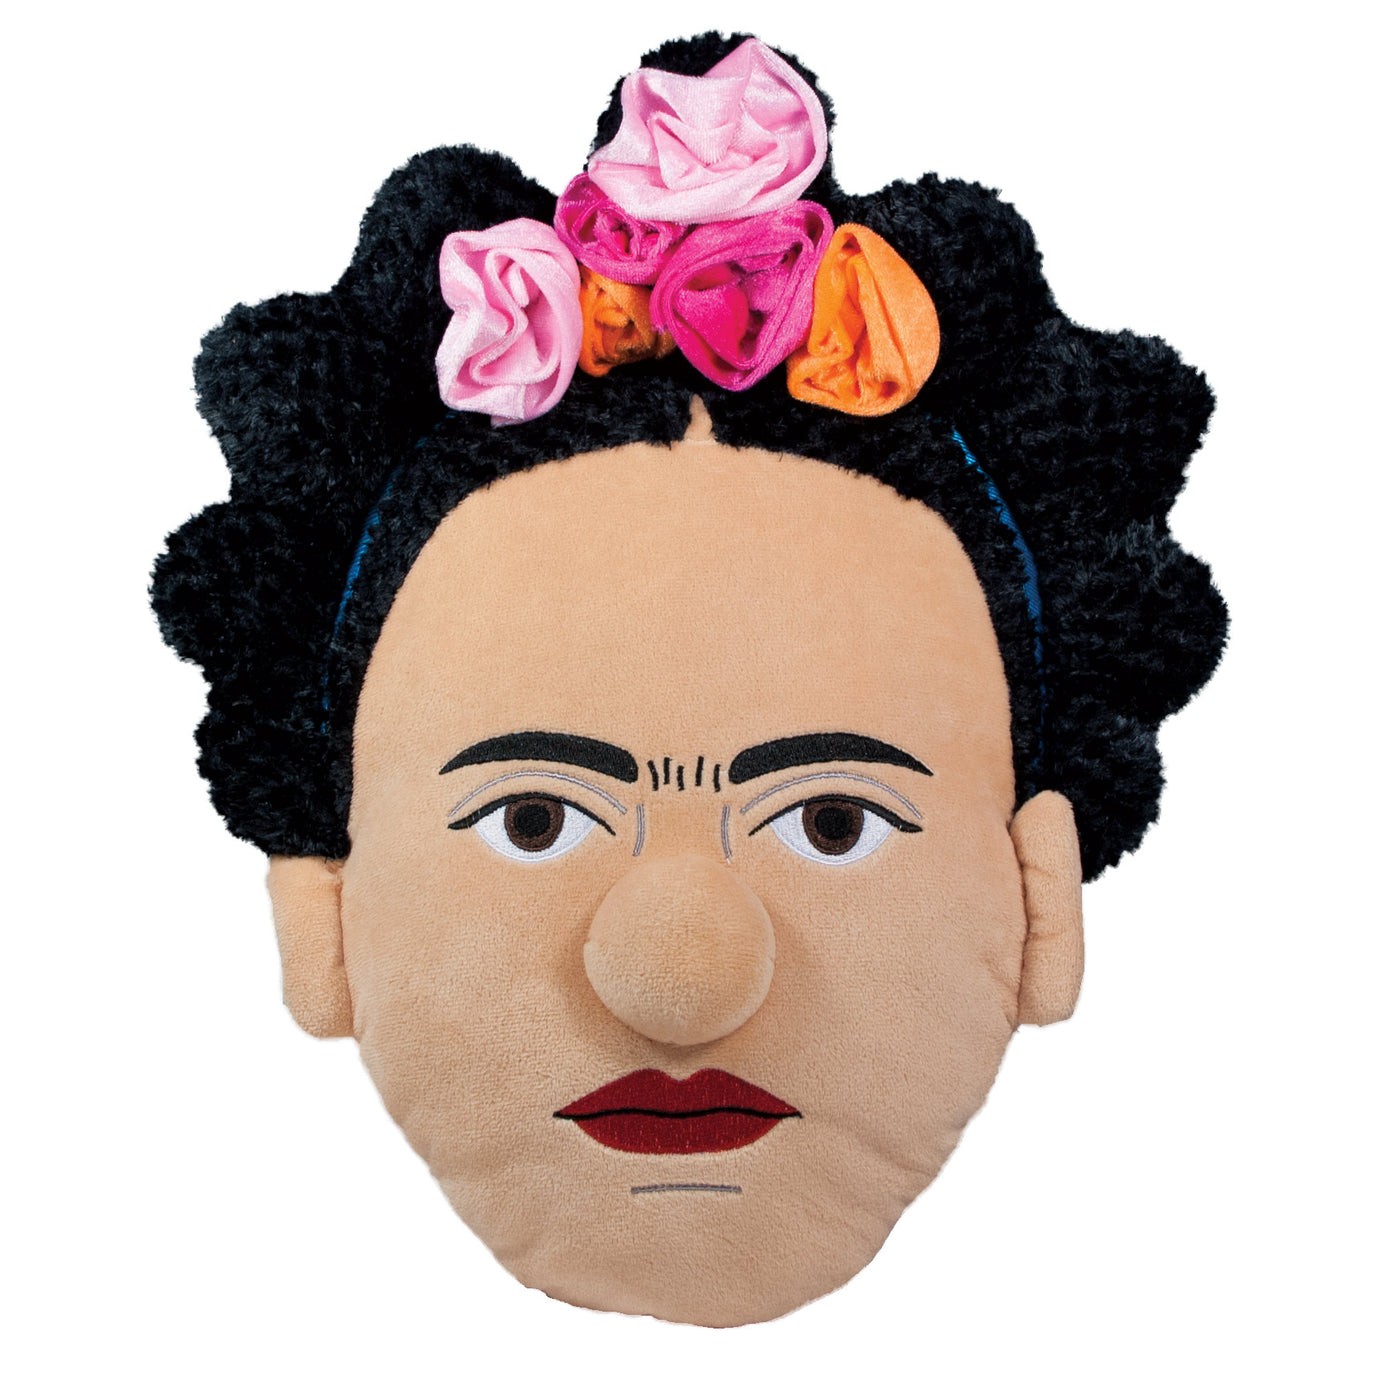 Plush Frida Kahlo head pillow. 